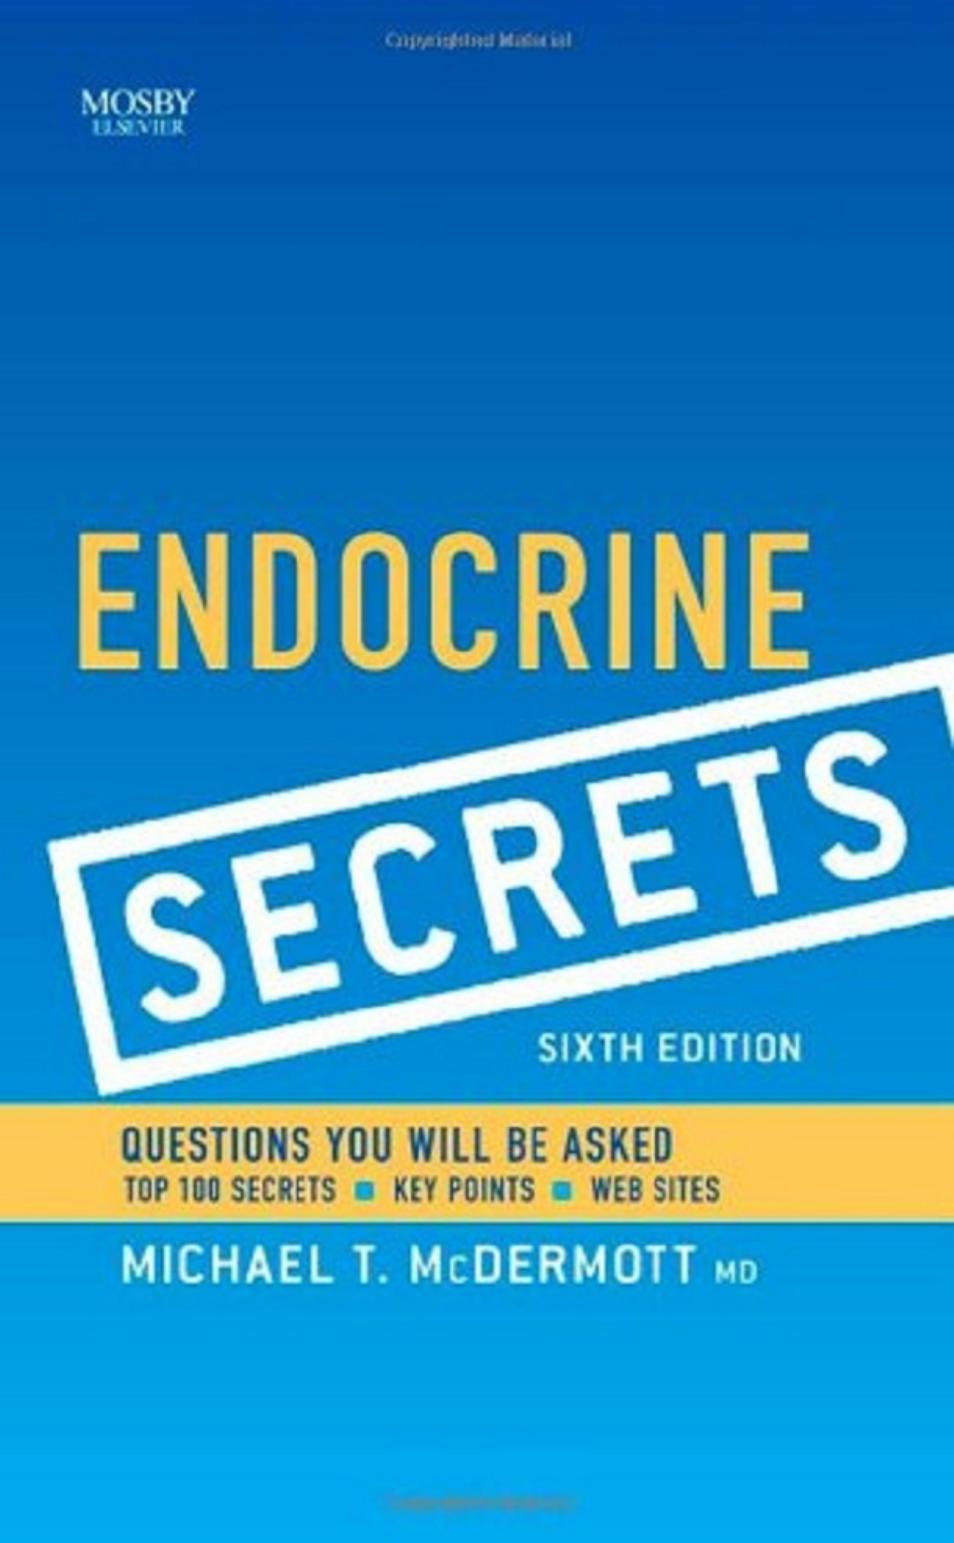 ENDOCRINE SECRETS 6th ed 2013